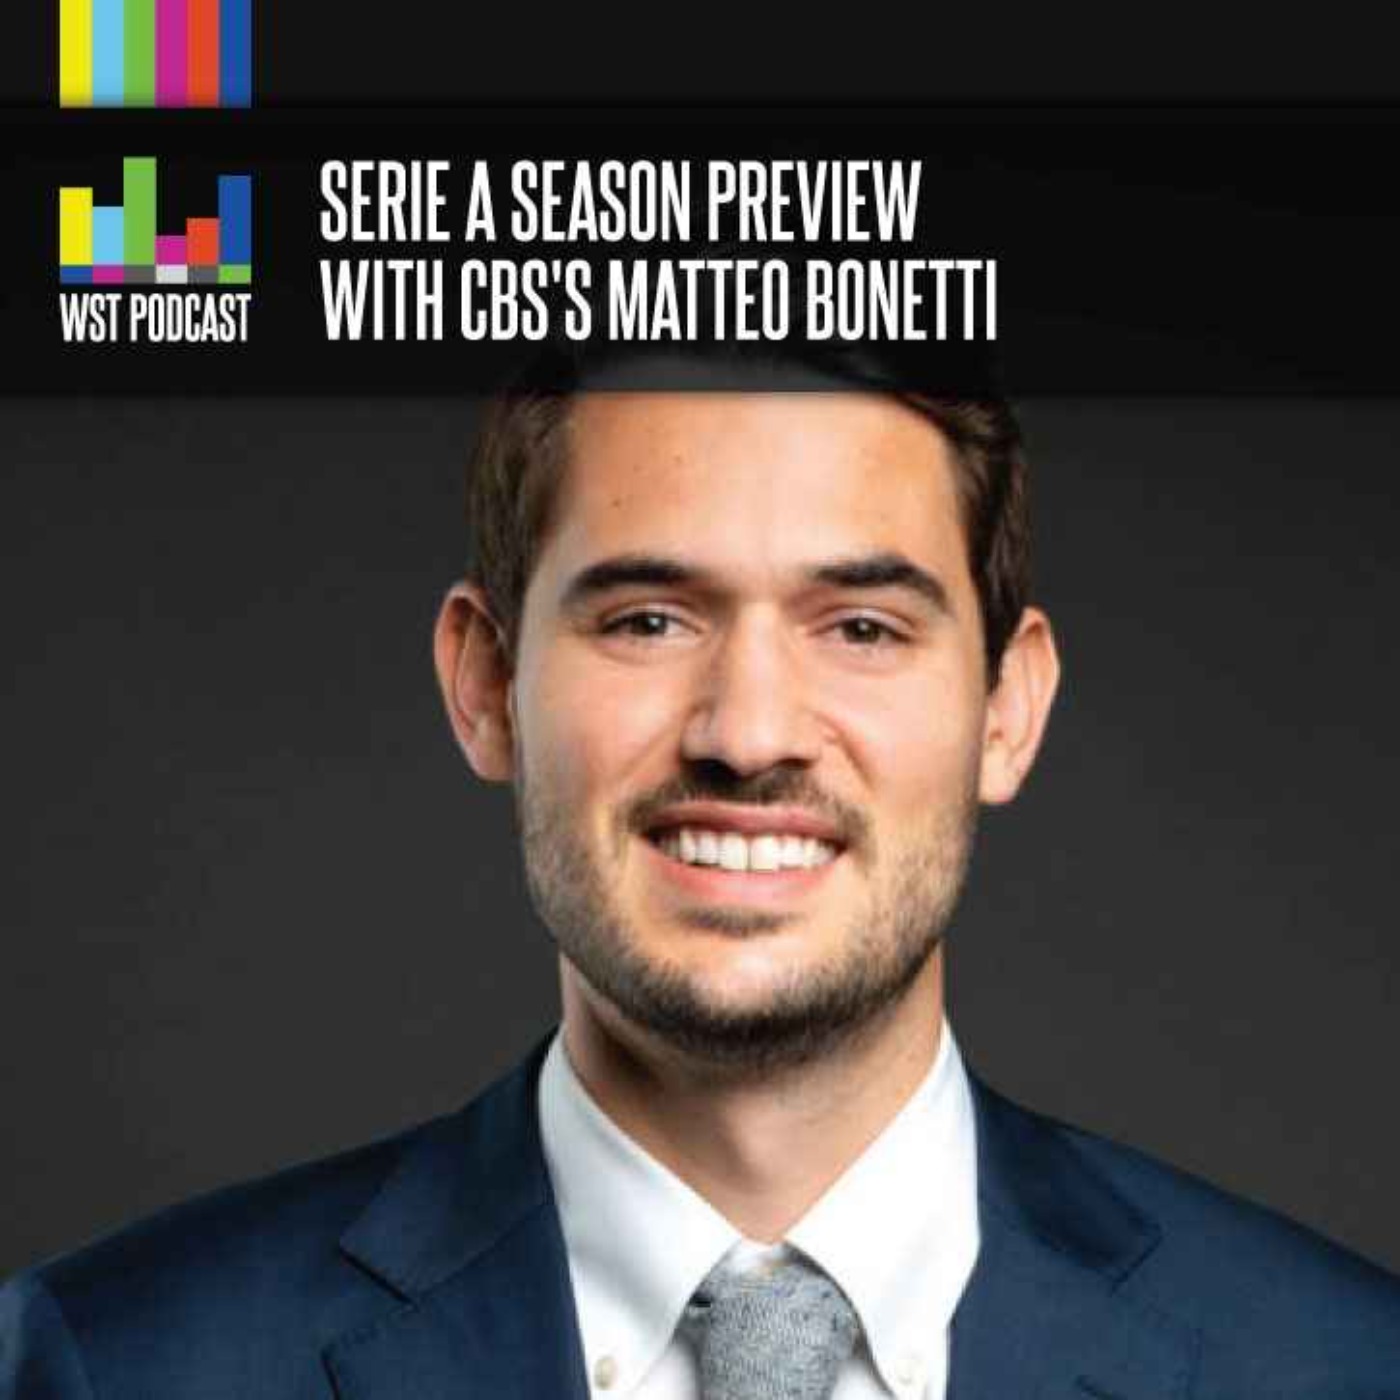 Serie A season preview with CBS's Matteo Bonetti